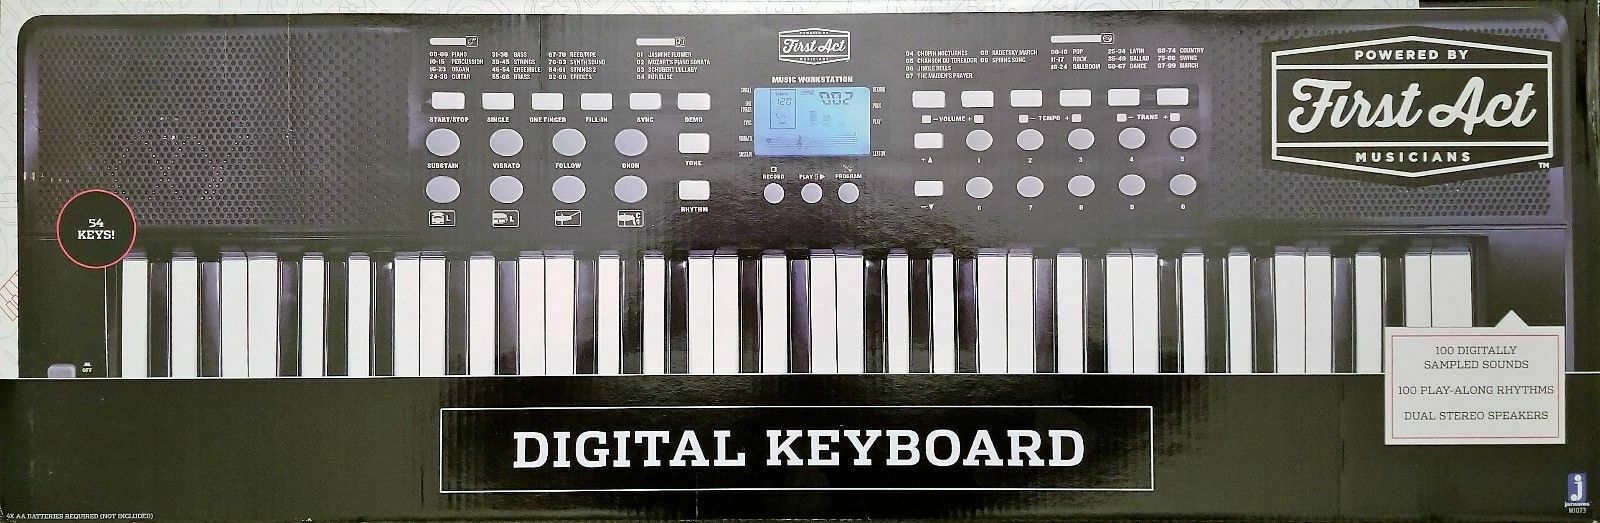 First Act MI073 Digital Keyboard, 54 Keys, 100 Instrument Sounds and Rythms, New